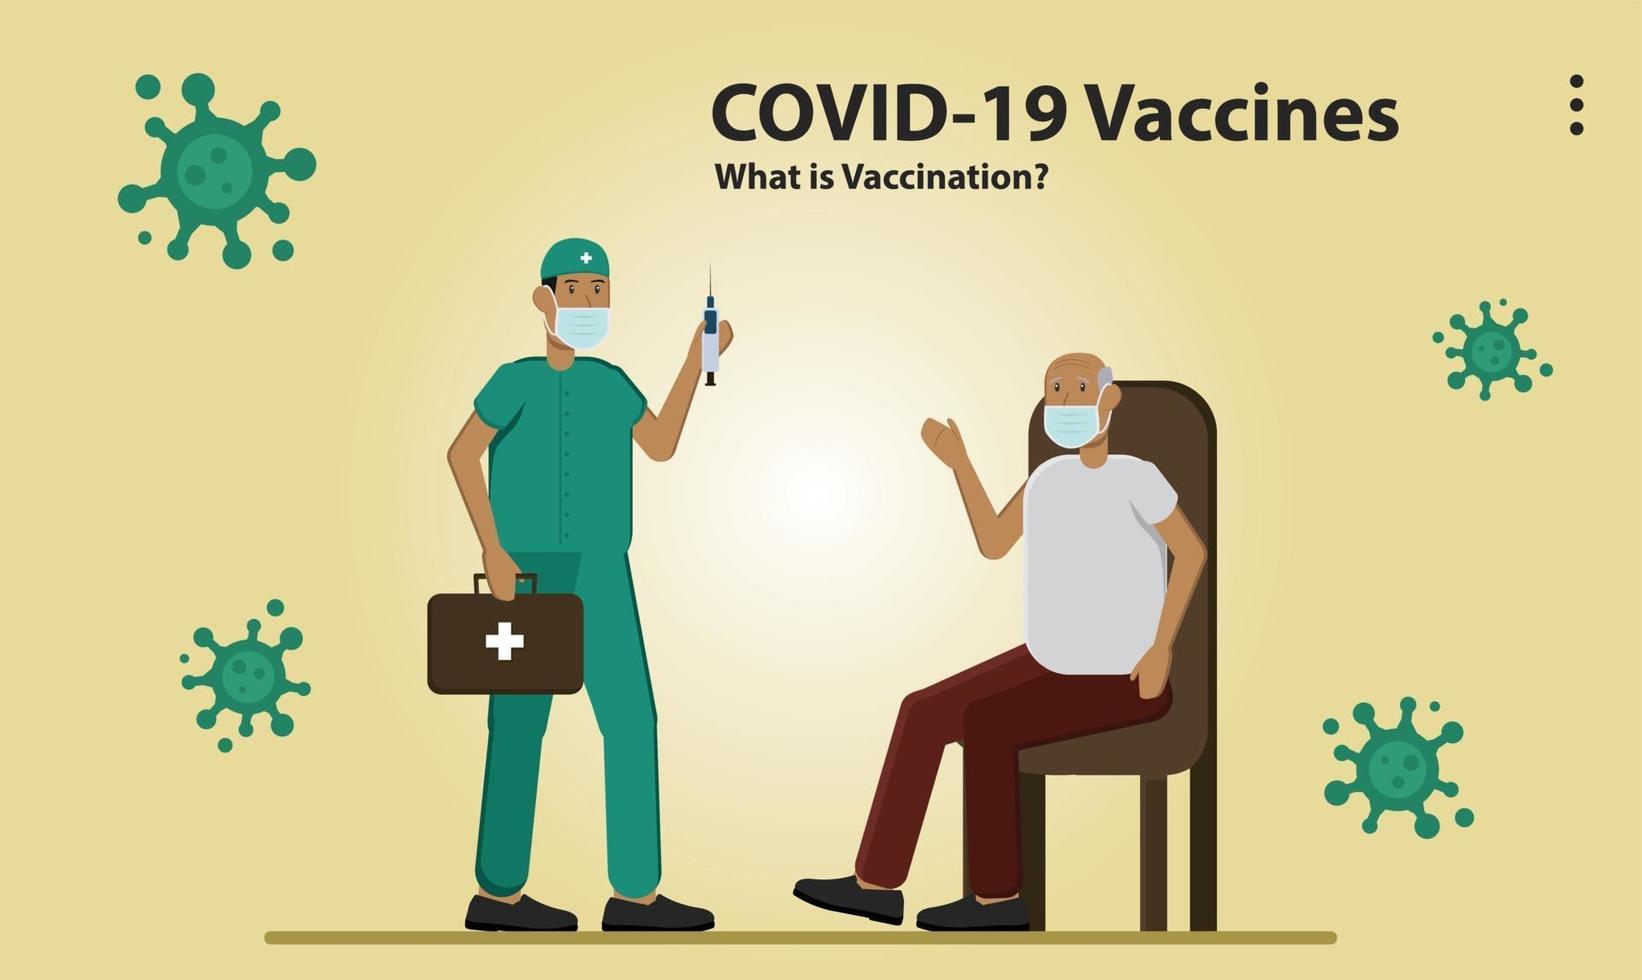 kampanj covid vacciner virusläkare pandemi globalt coronavirus vektor